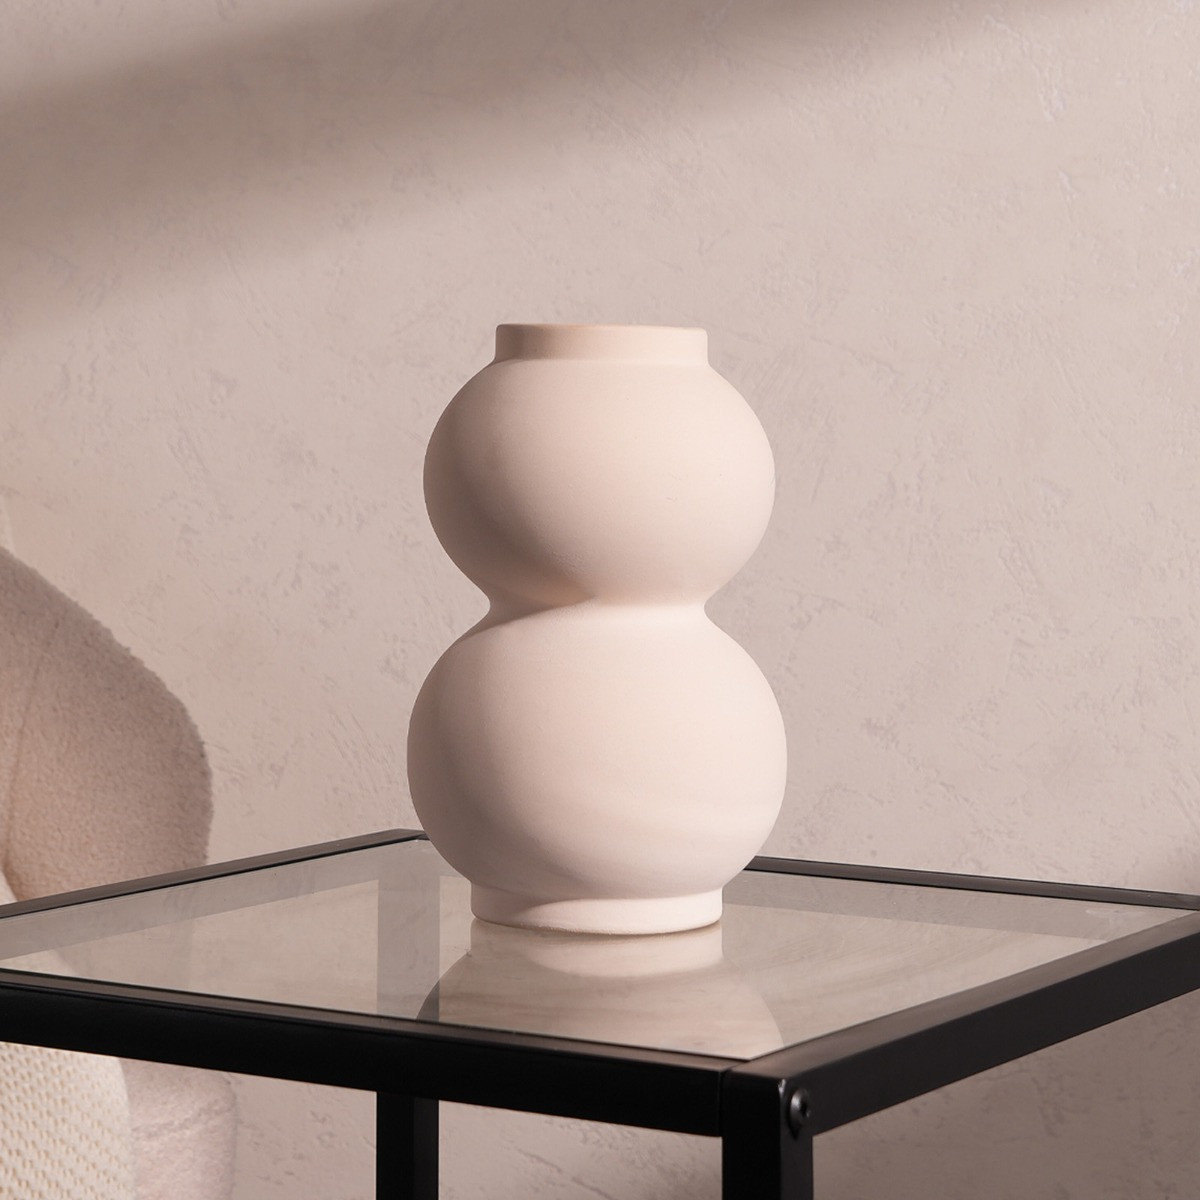 OHS Ceramic Decorative Bubble Vase - Natural>